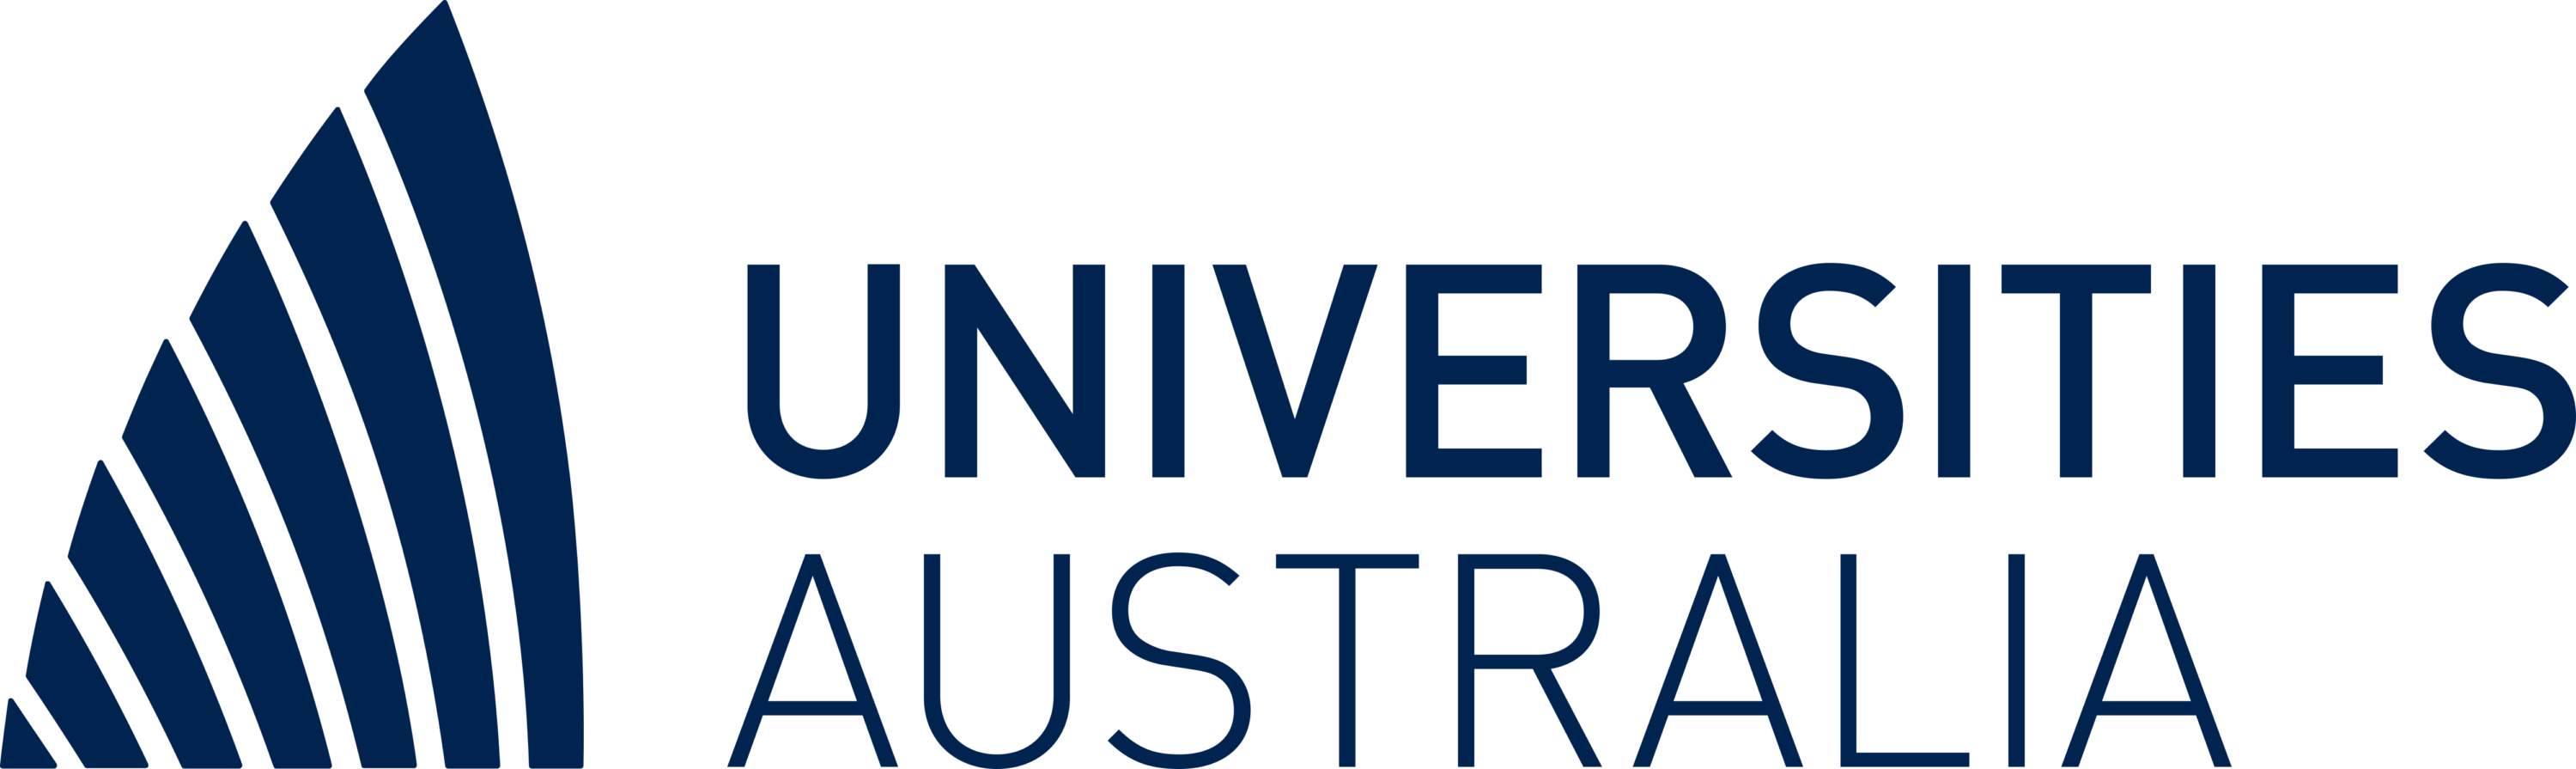 Universities Australia Logo